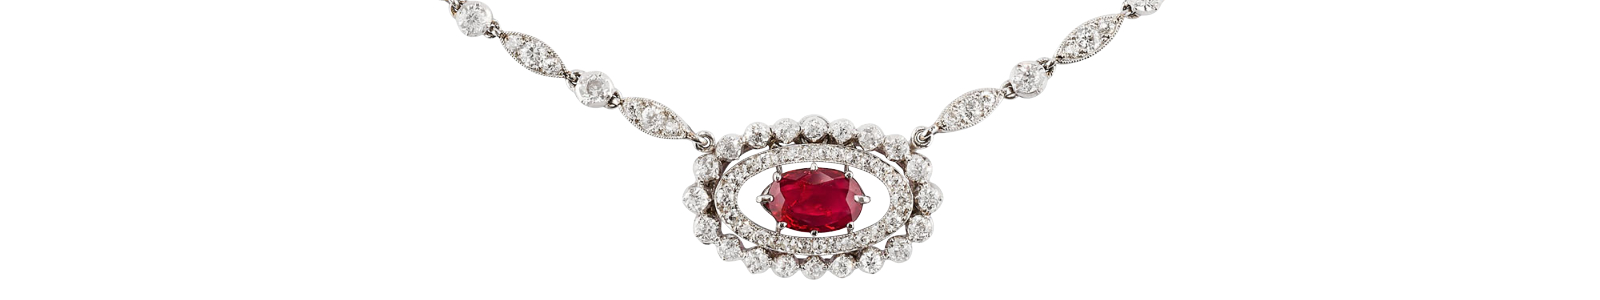 Jewels & Watches Online: La Dolce Vita